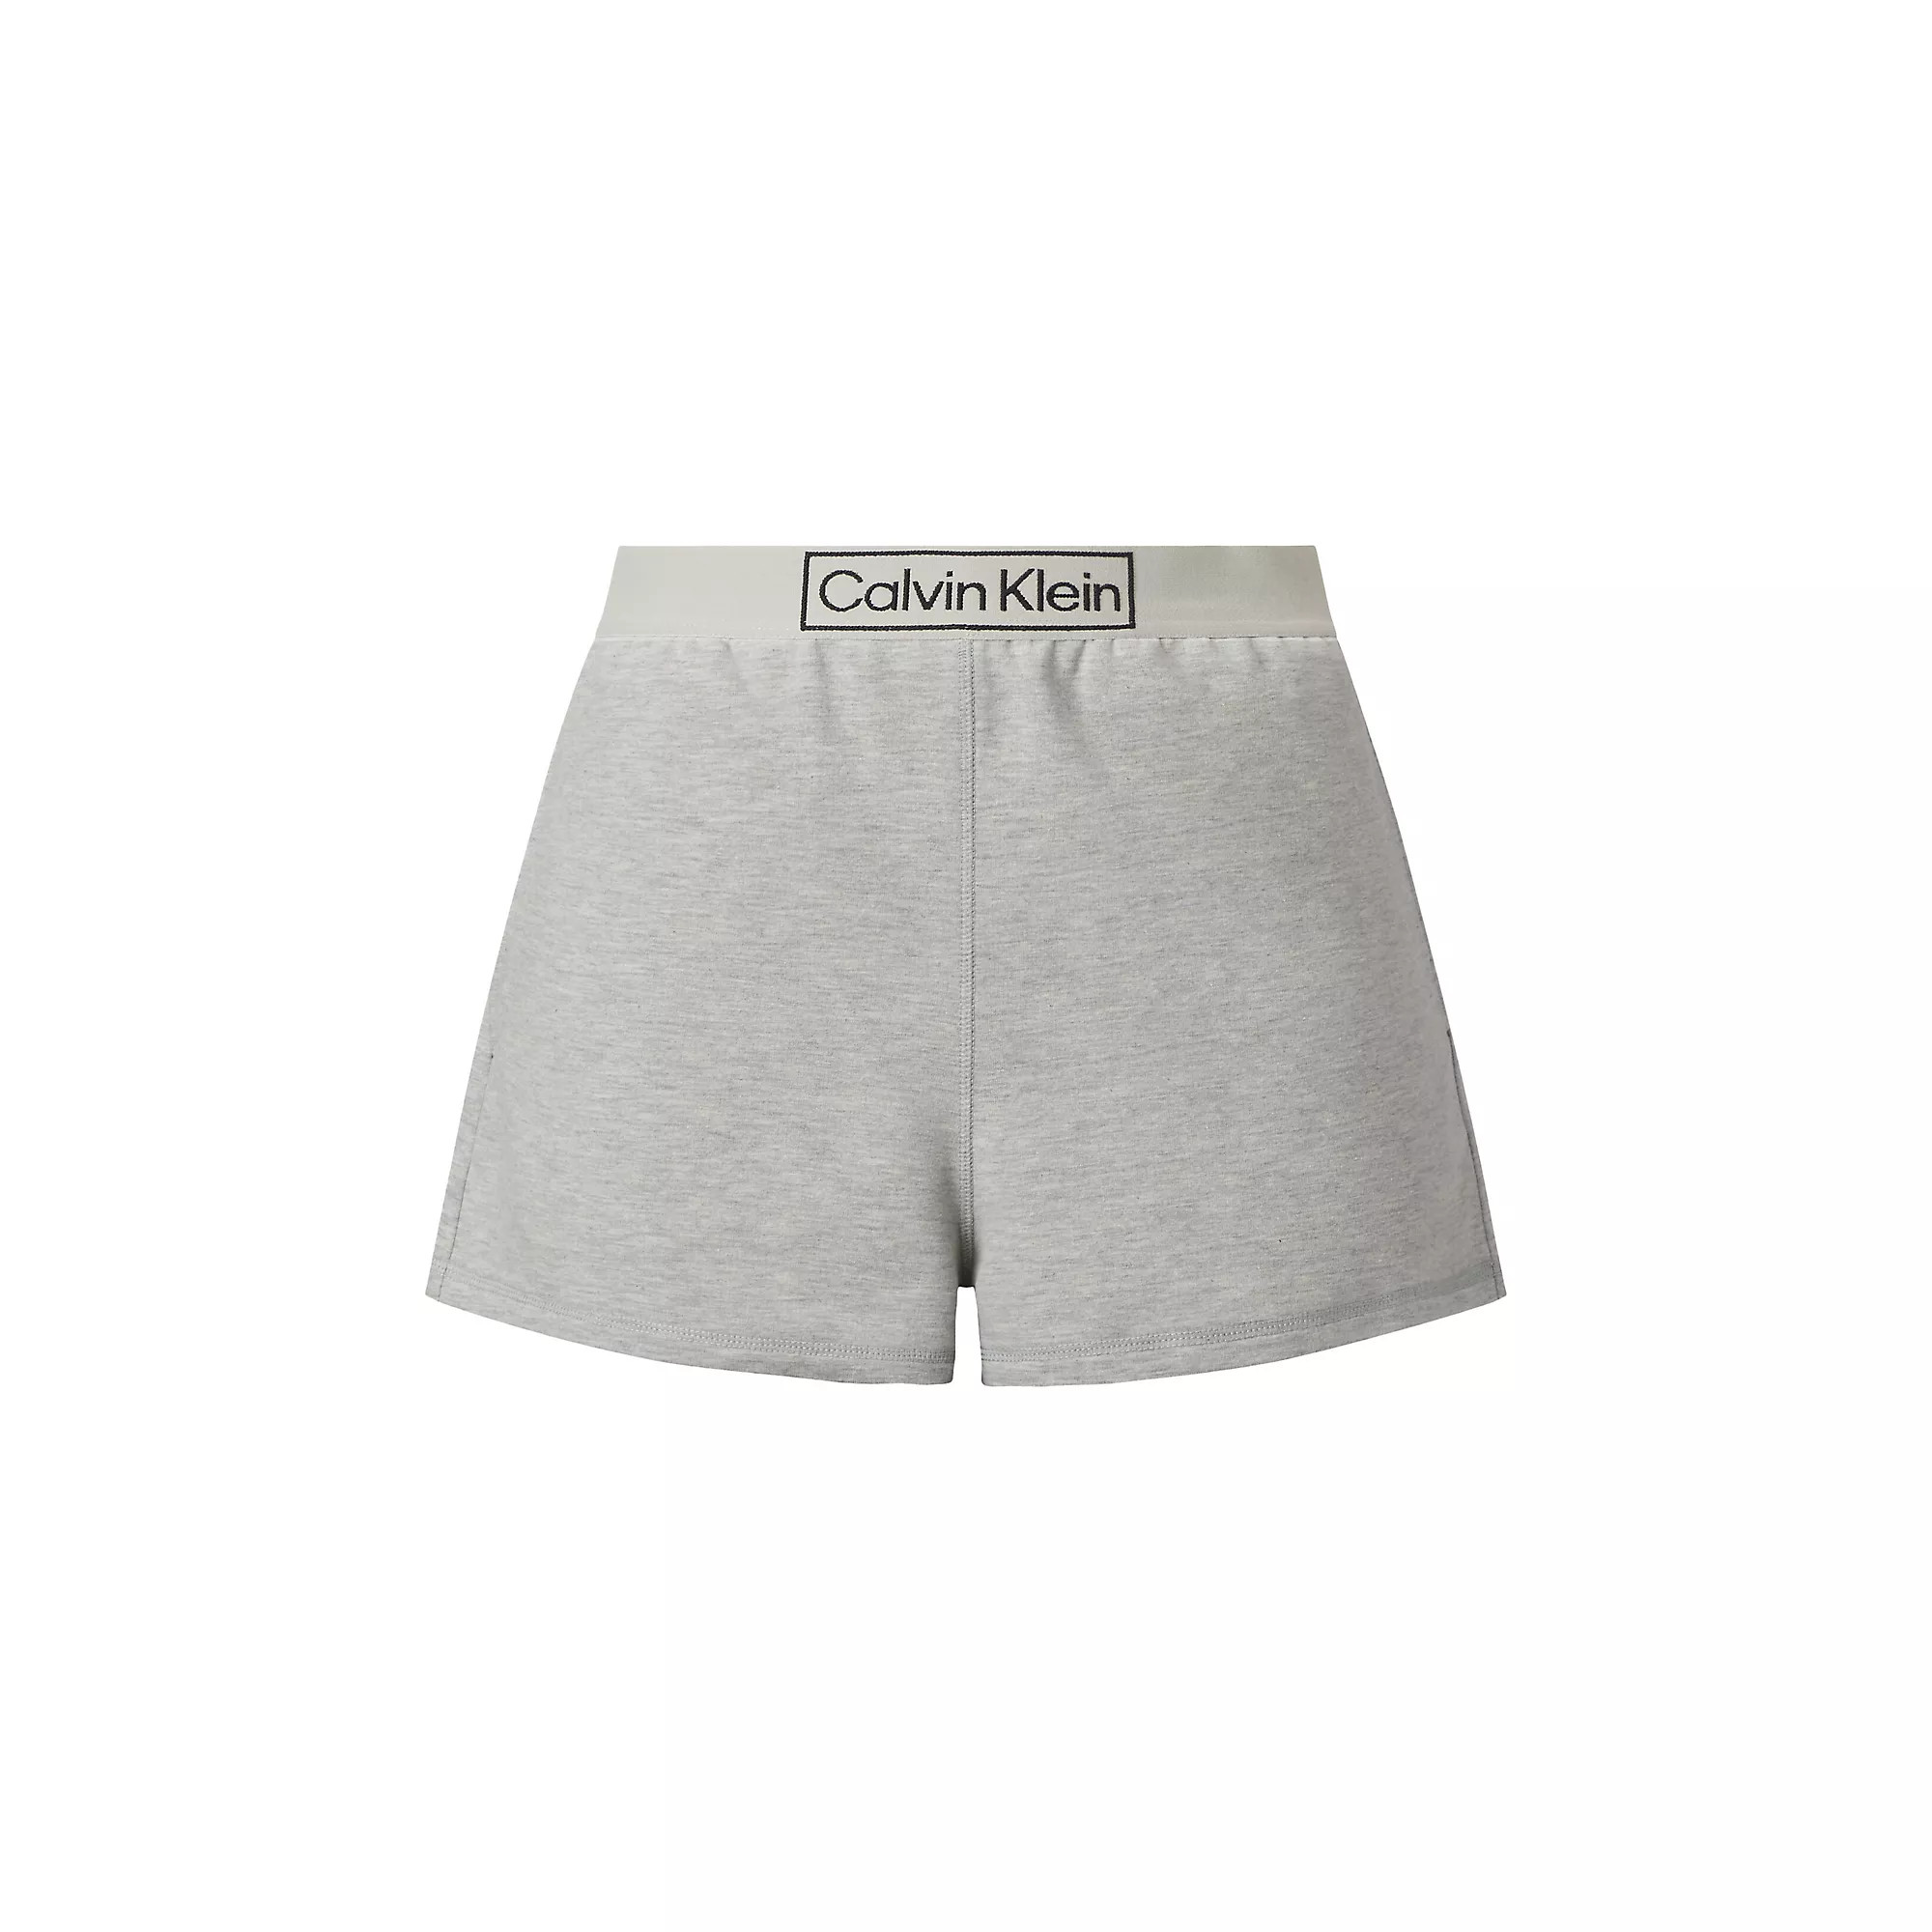 Spodní prádlo Dámské šortky SLEEP SHORT 000QS6799EP7A - Calvin Klein L